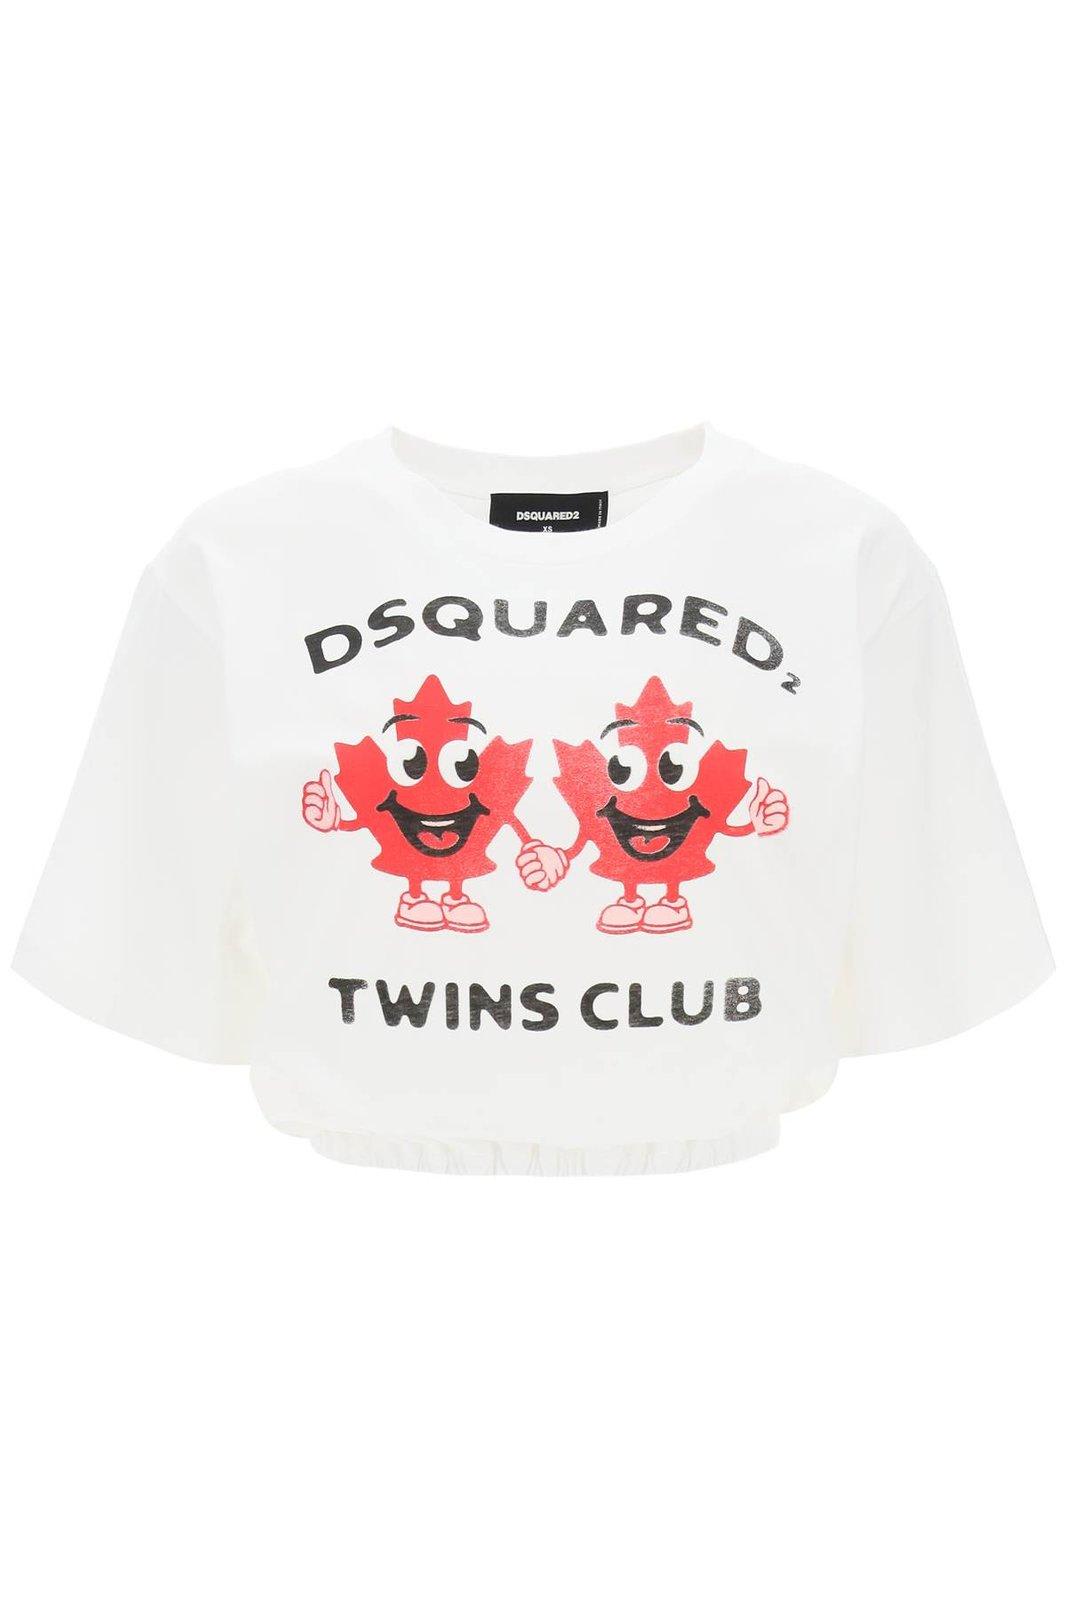 Shop Dsquared2 Twins Club Print Cropped T-shirt